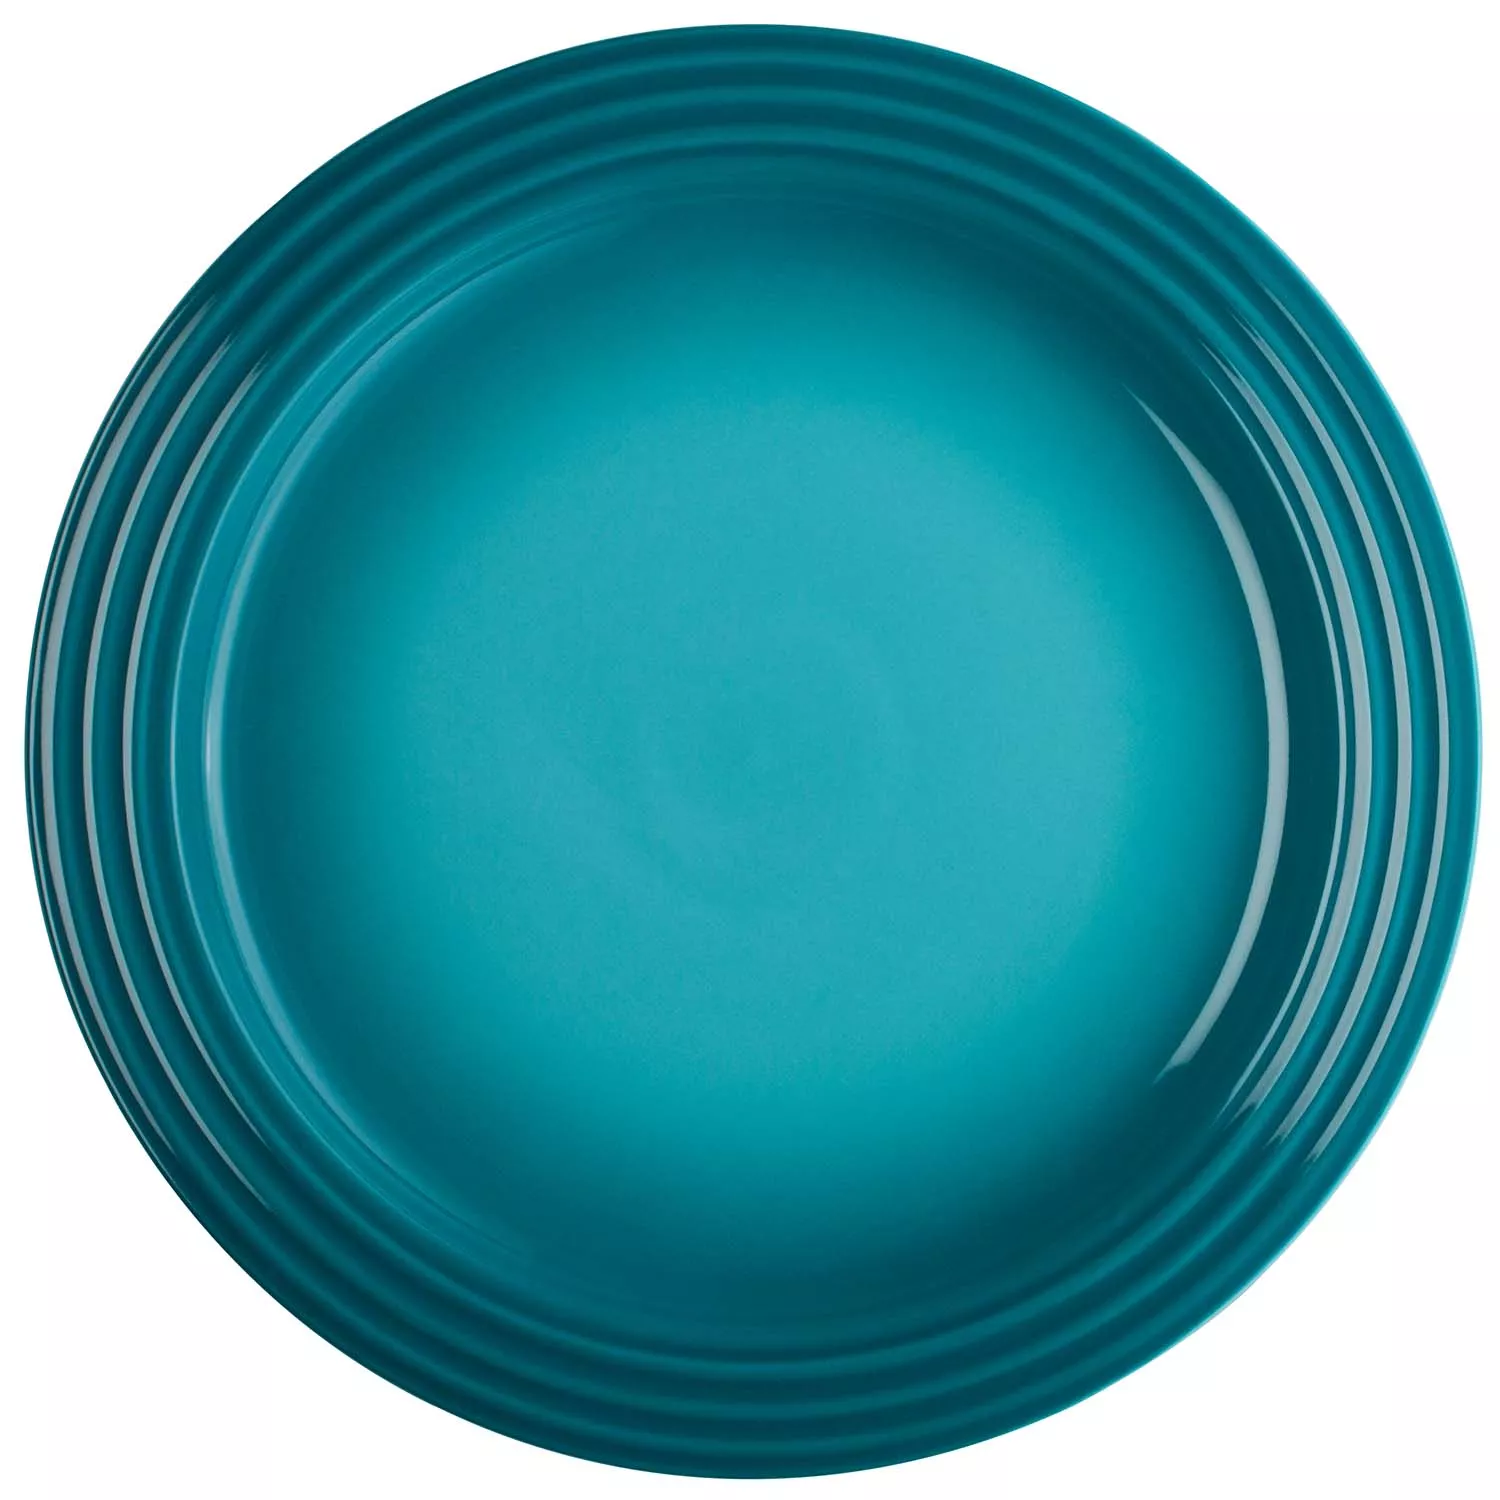 Le Creuset Stoneware Dinner Plates, Set of 4 | Caribbean